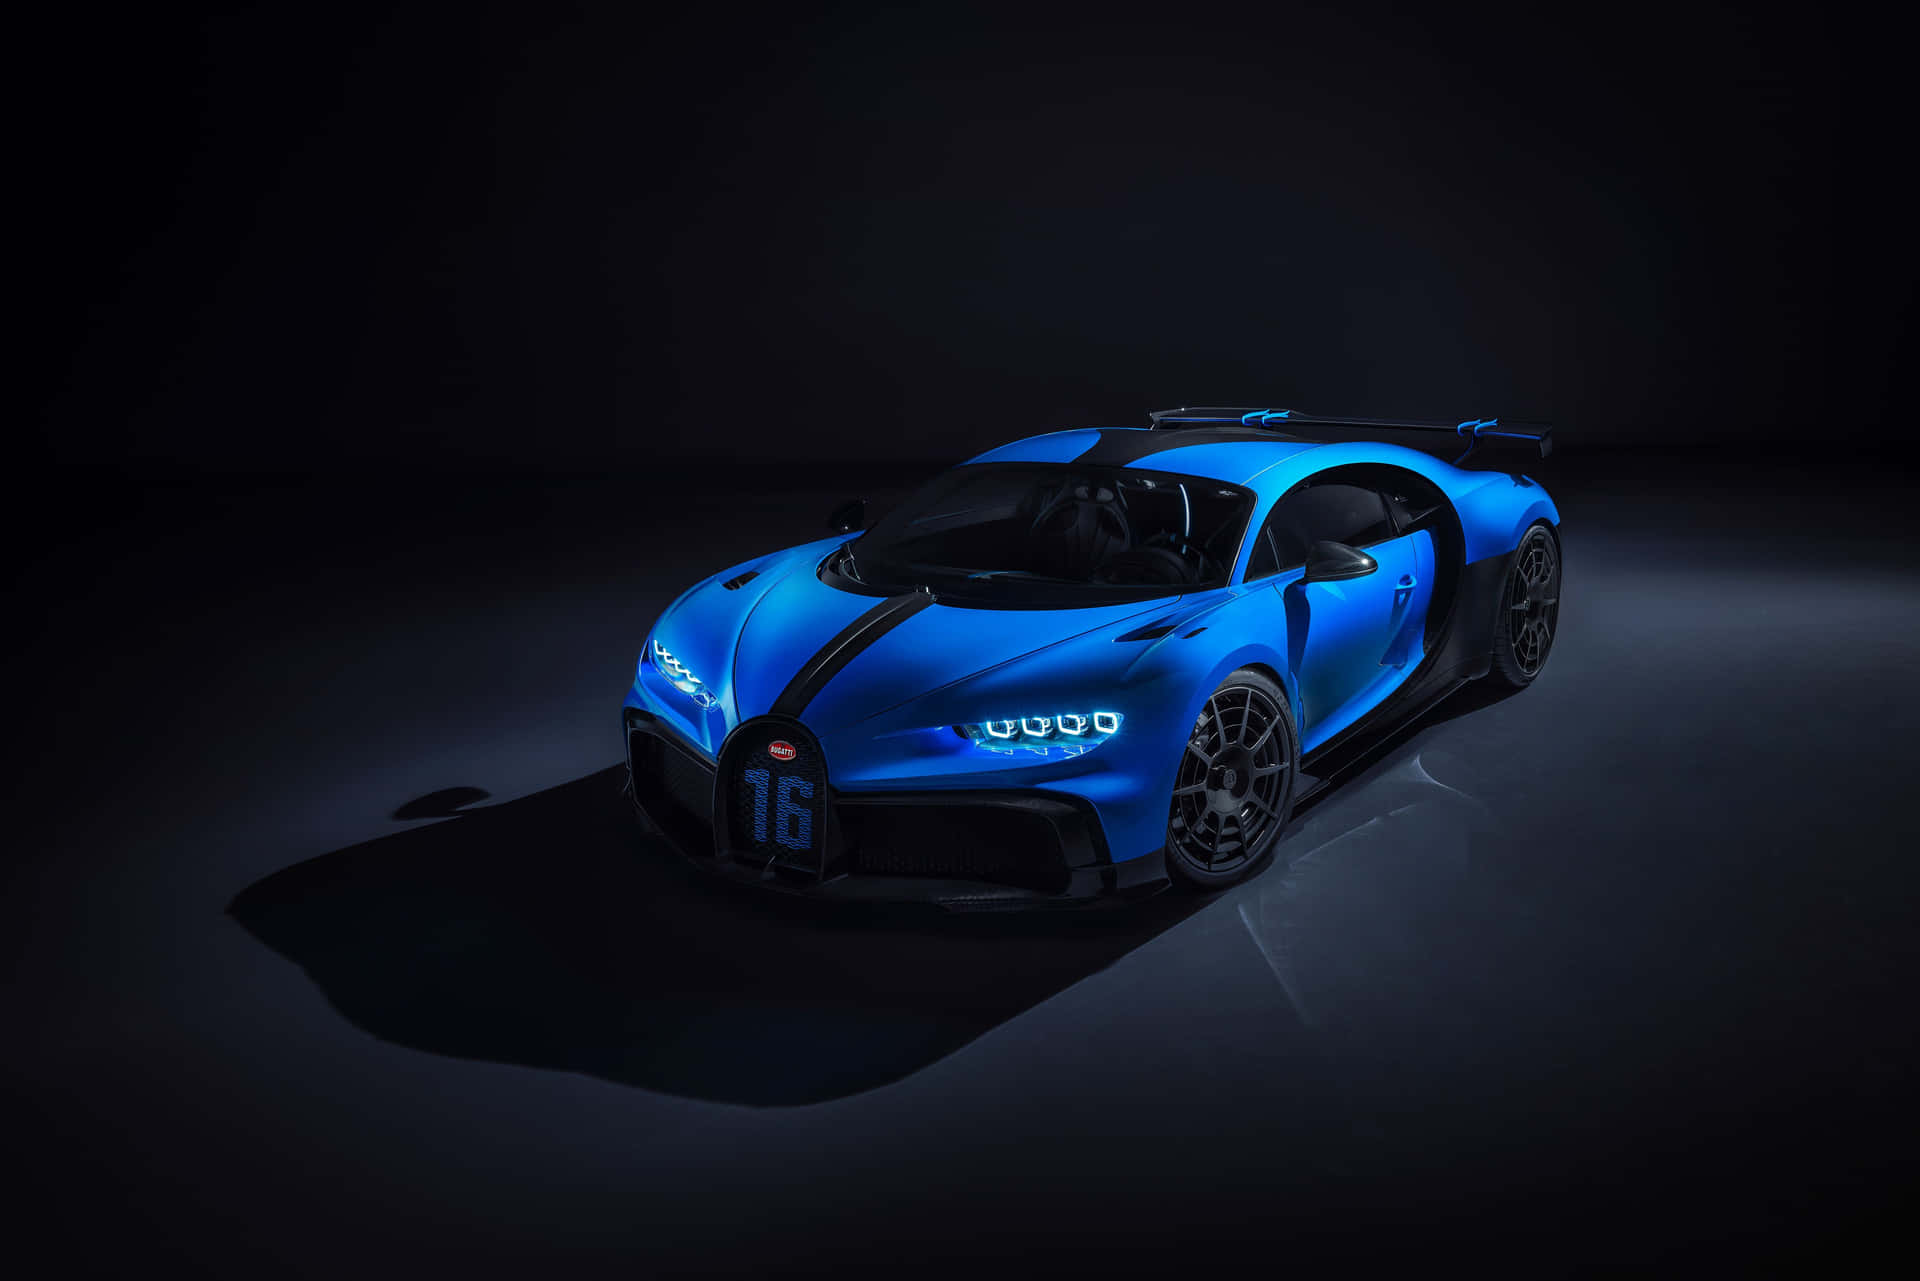 The Luxurious Elegance of a Bugatti